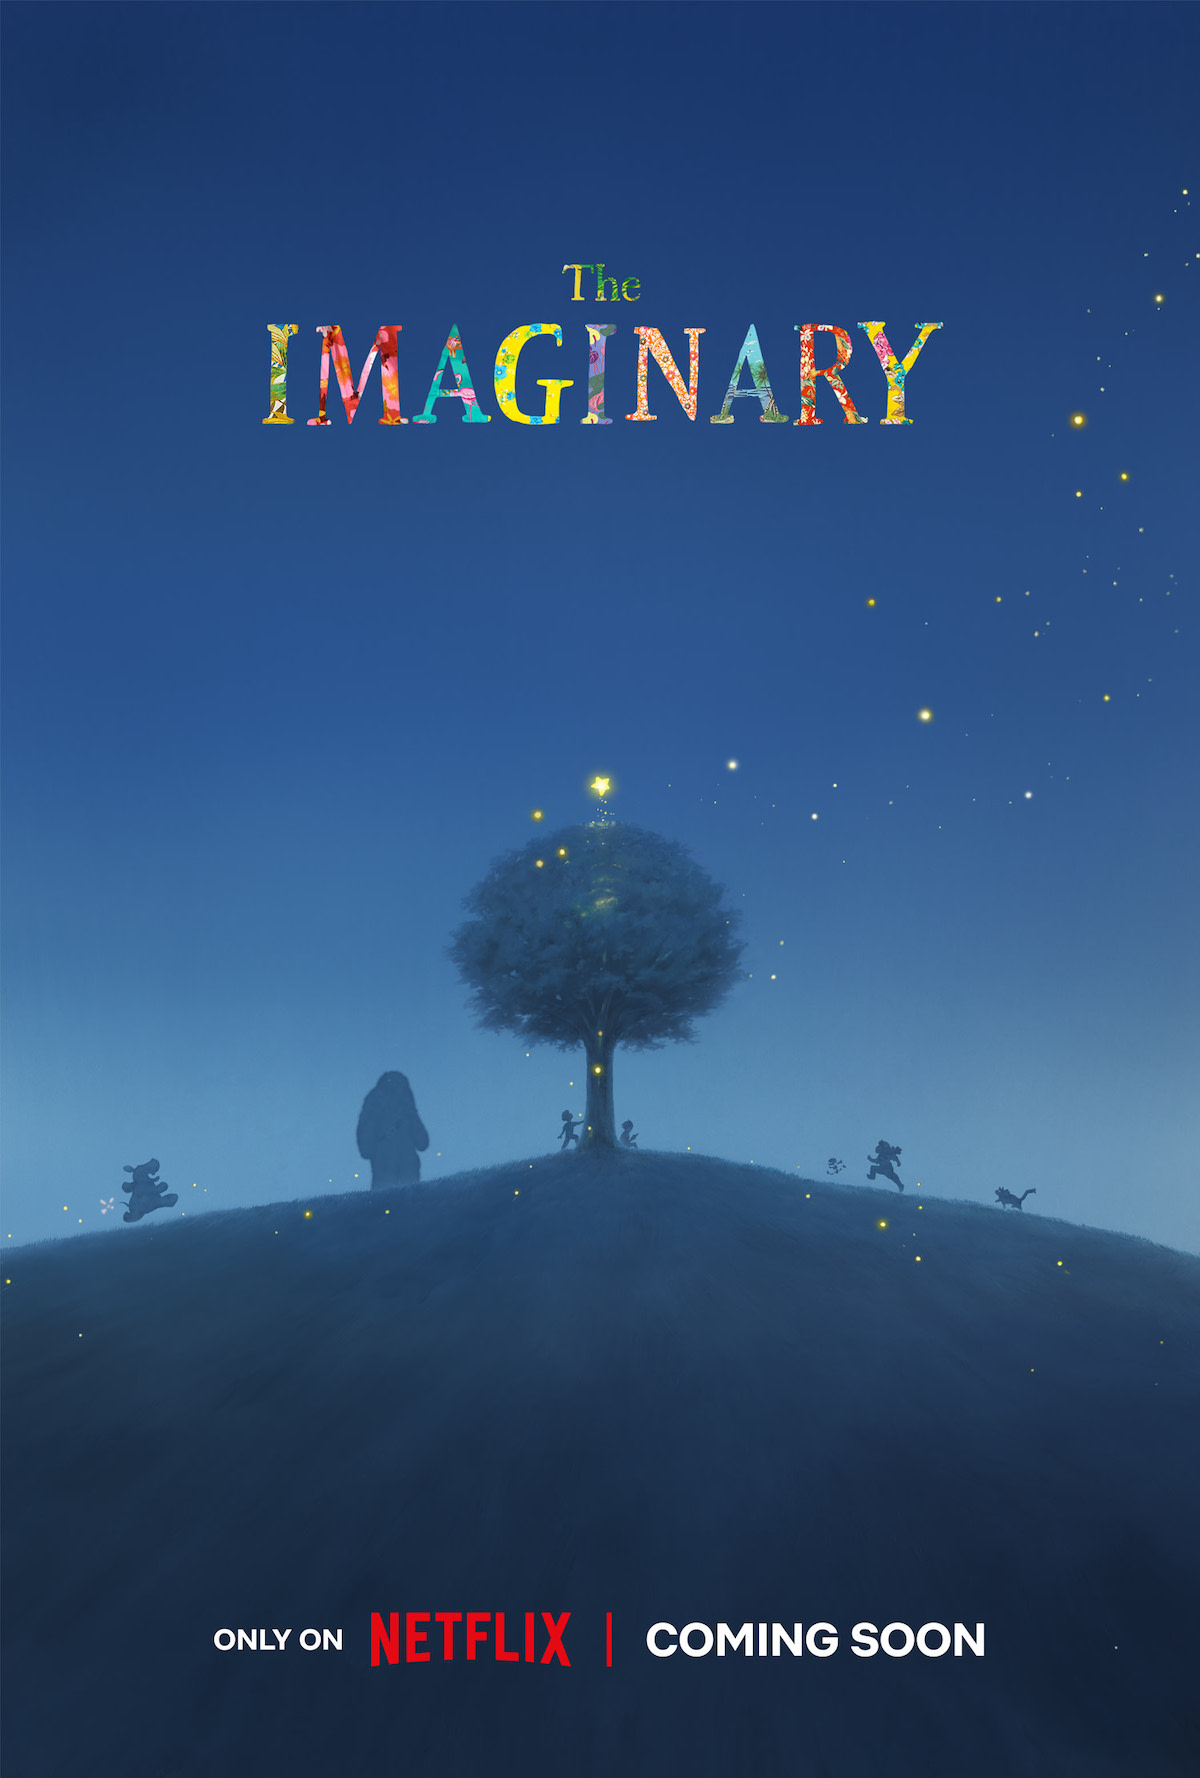 The Imaginary, prima locandina per Netflix